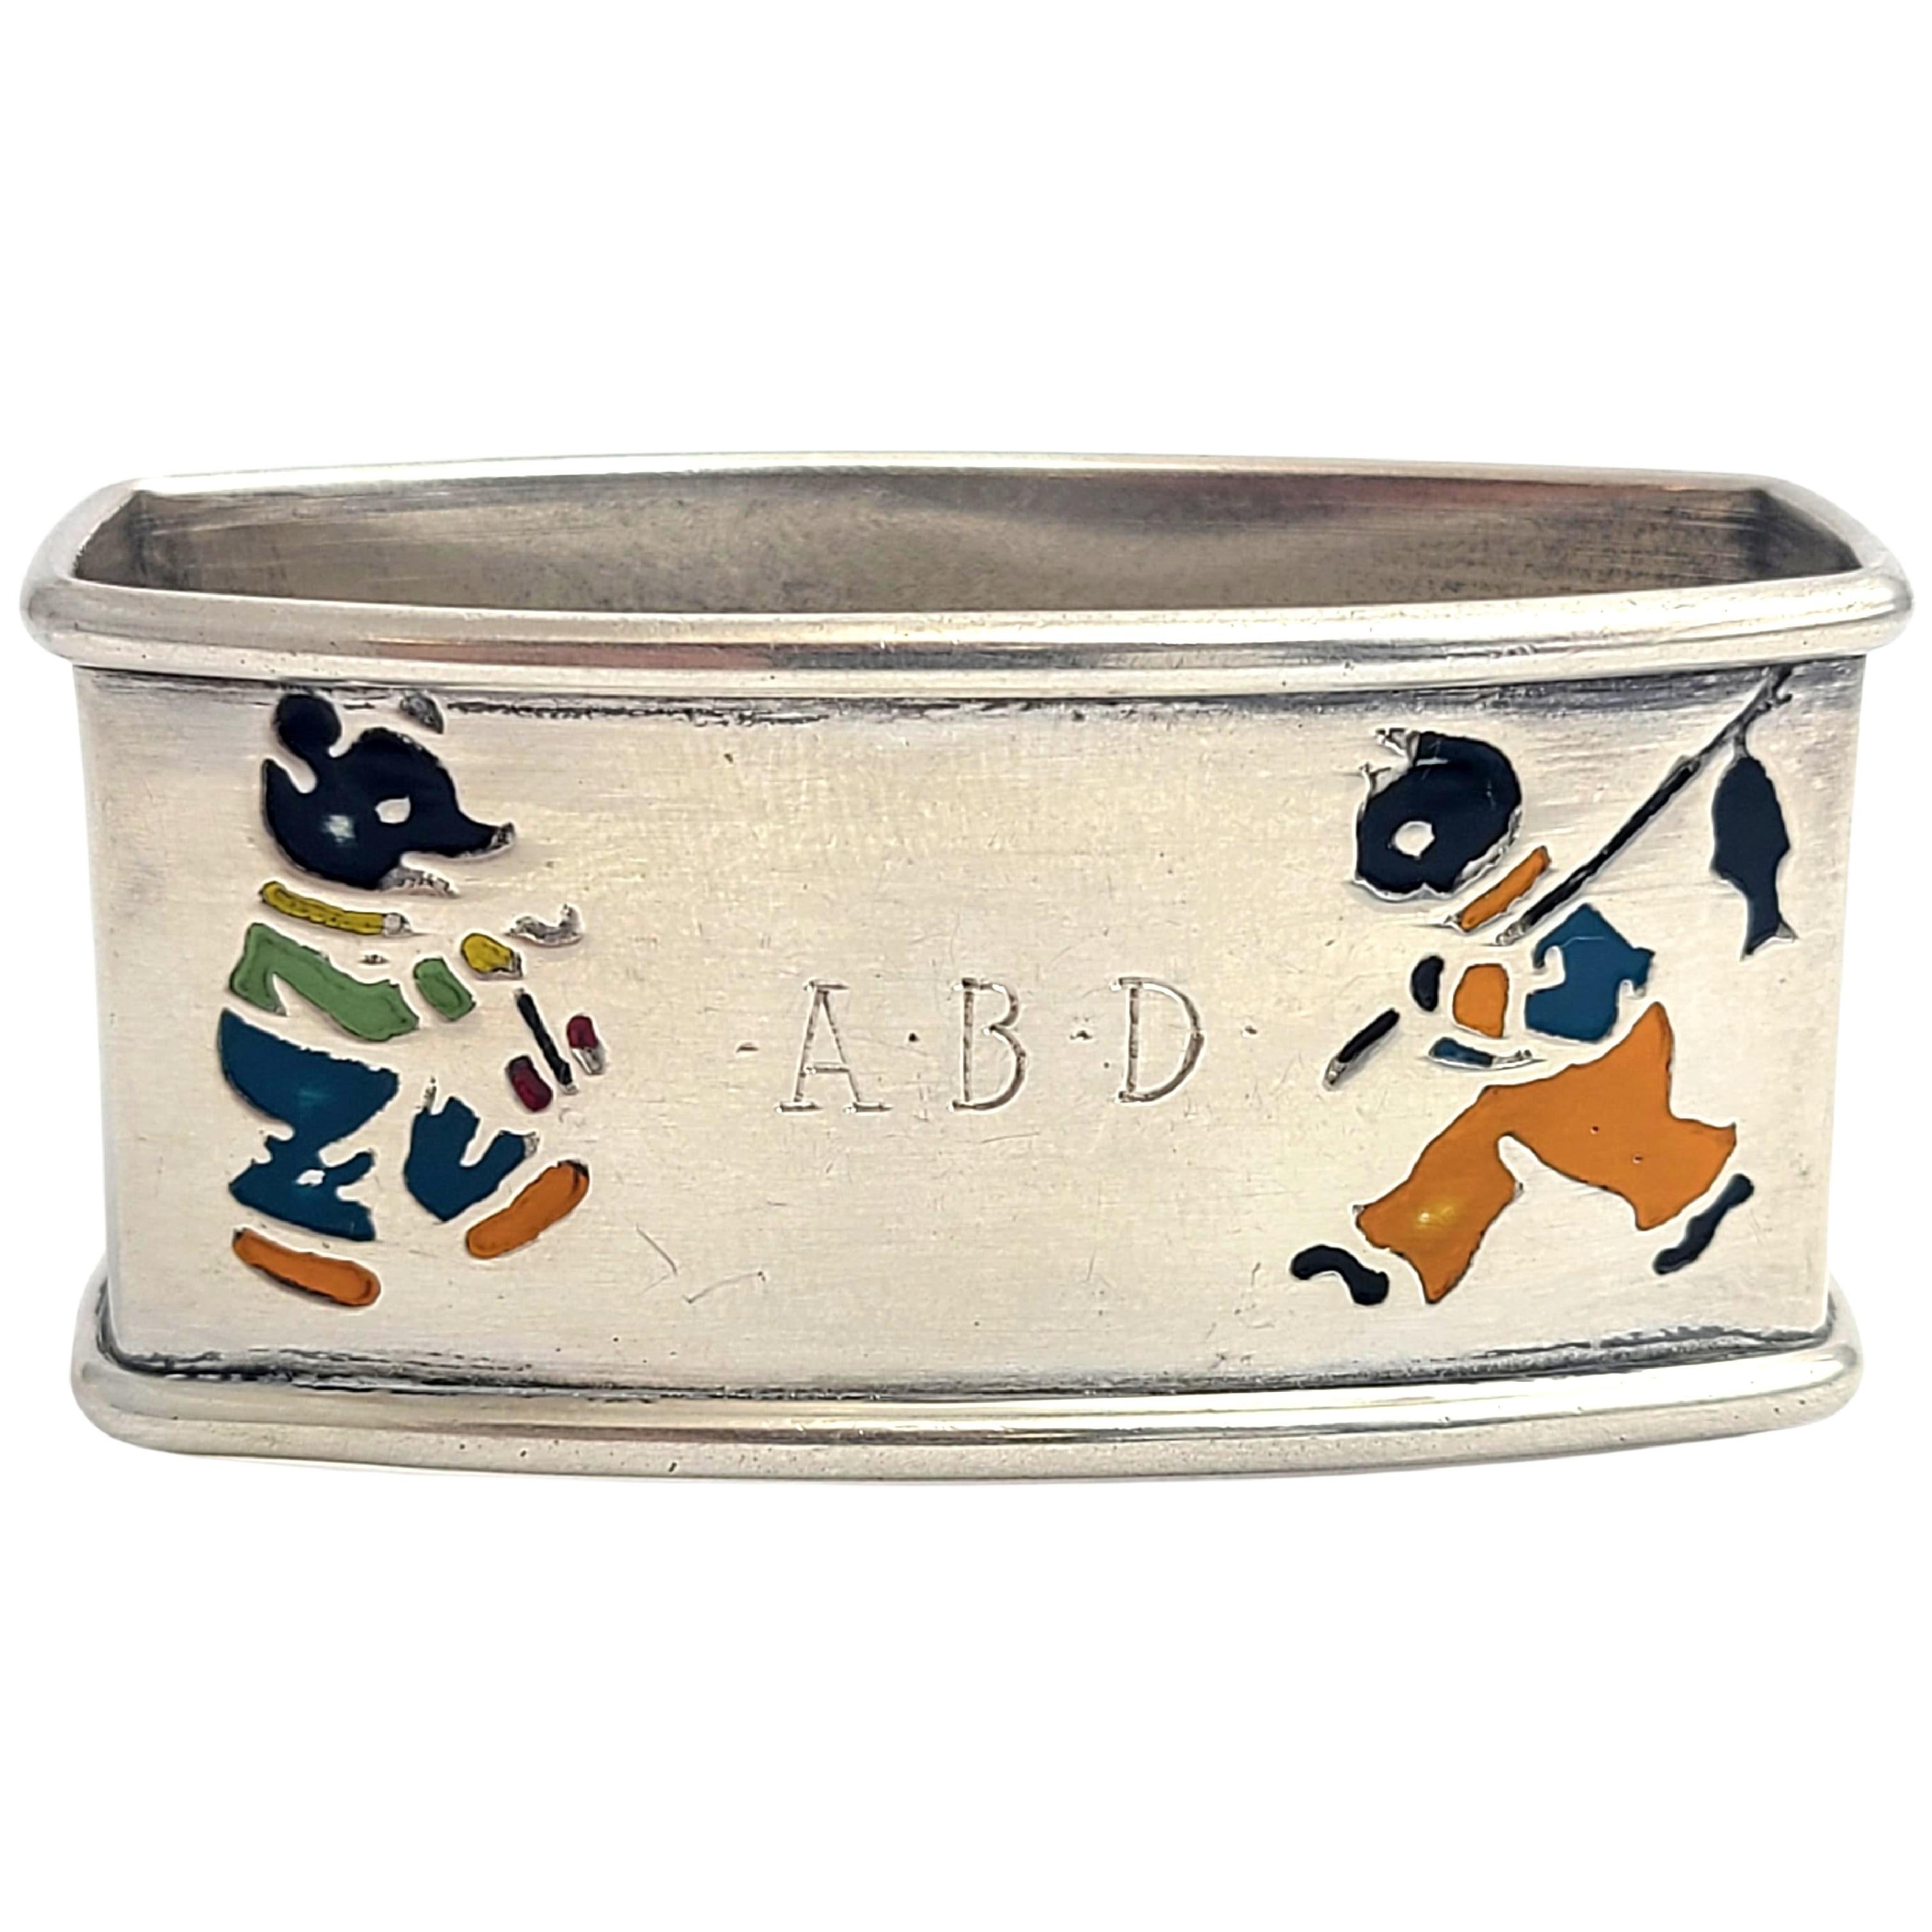 Webster Sterling Silver Enamel Child's Napkin Ring with Monogram #12342 For Sale 2